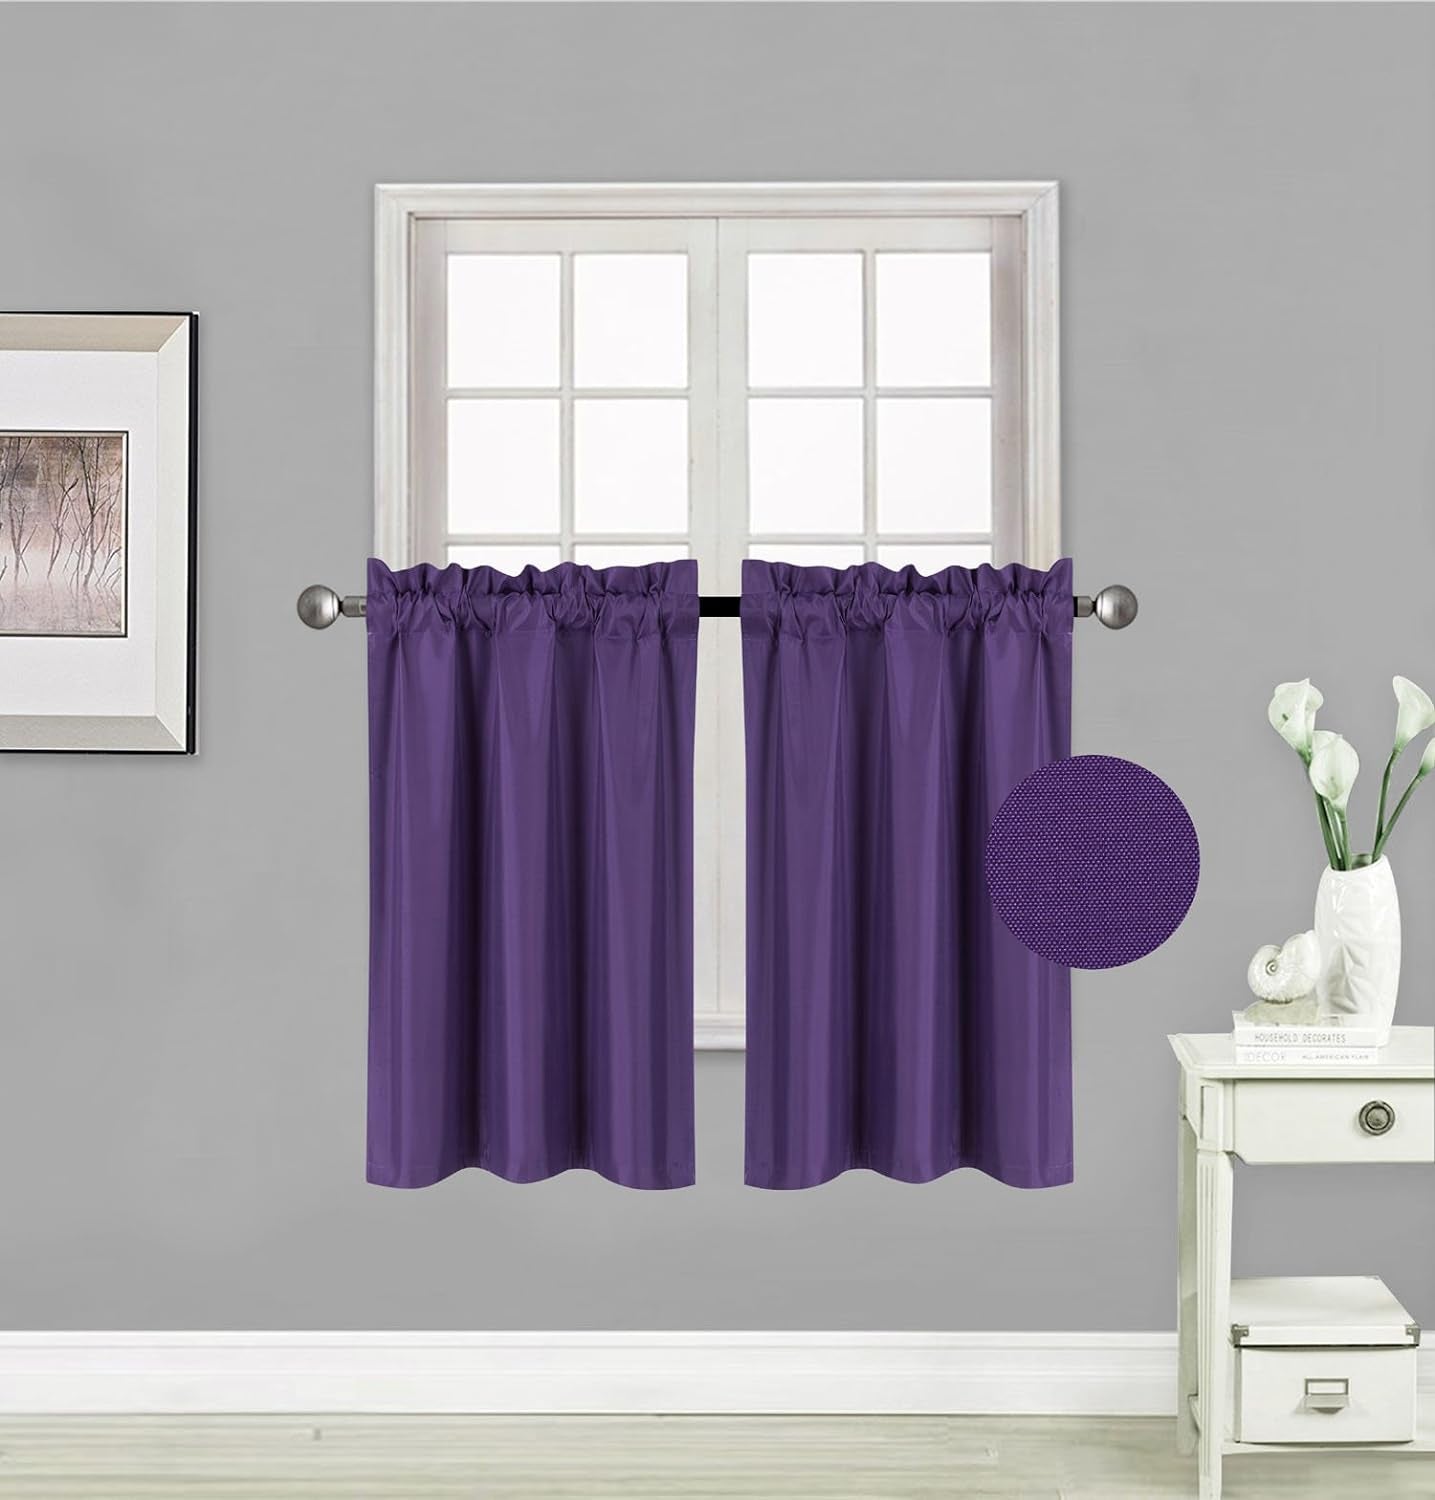 Elegant Home 2 Short Panels Tiers Small Window Treatment Curtain Blackout 28" W X 36" L Each for Kitchen Bathroom # R5  Elegant Home Decor Purple  